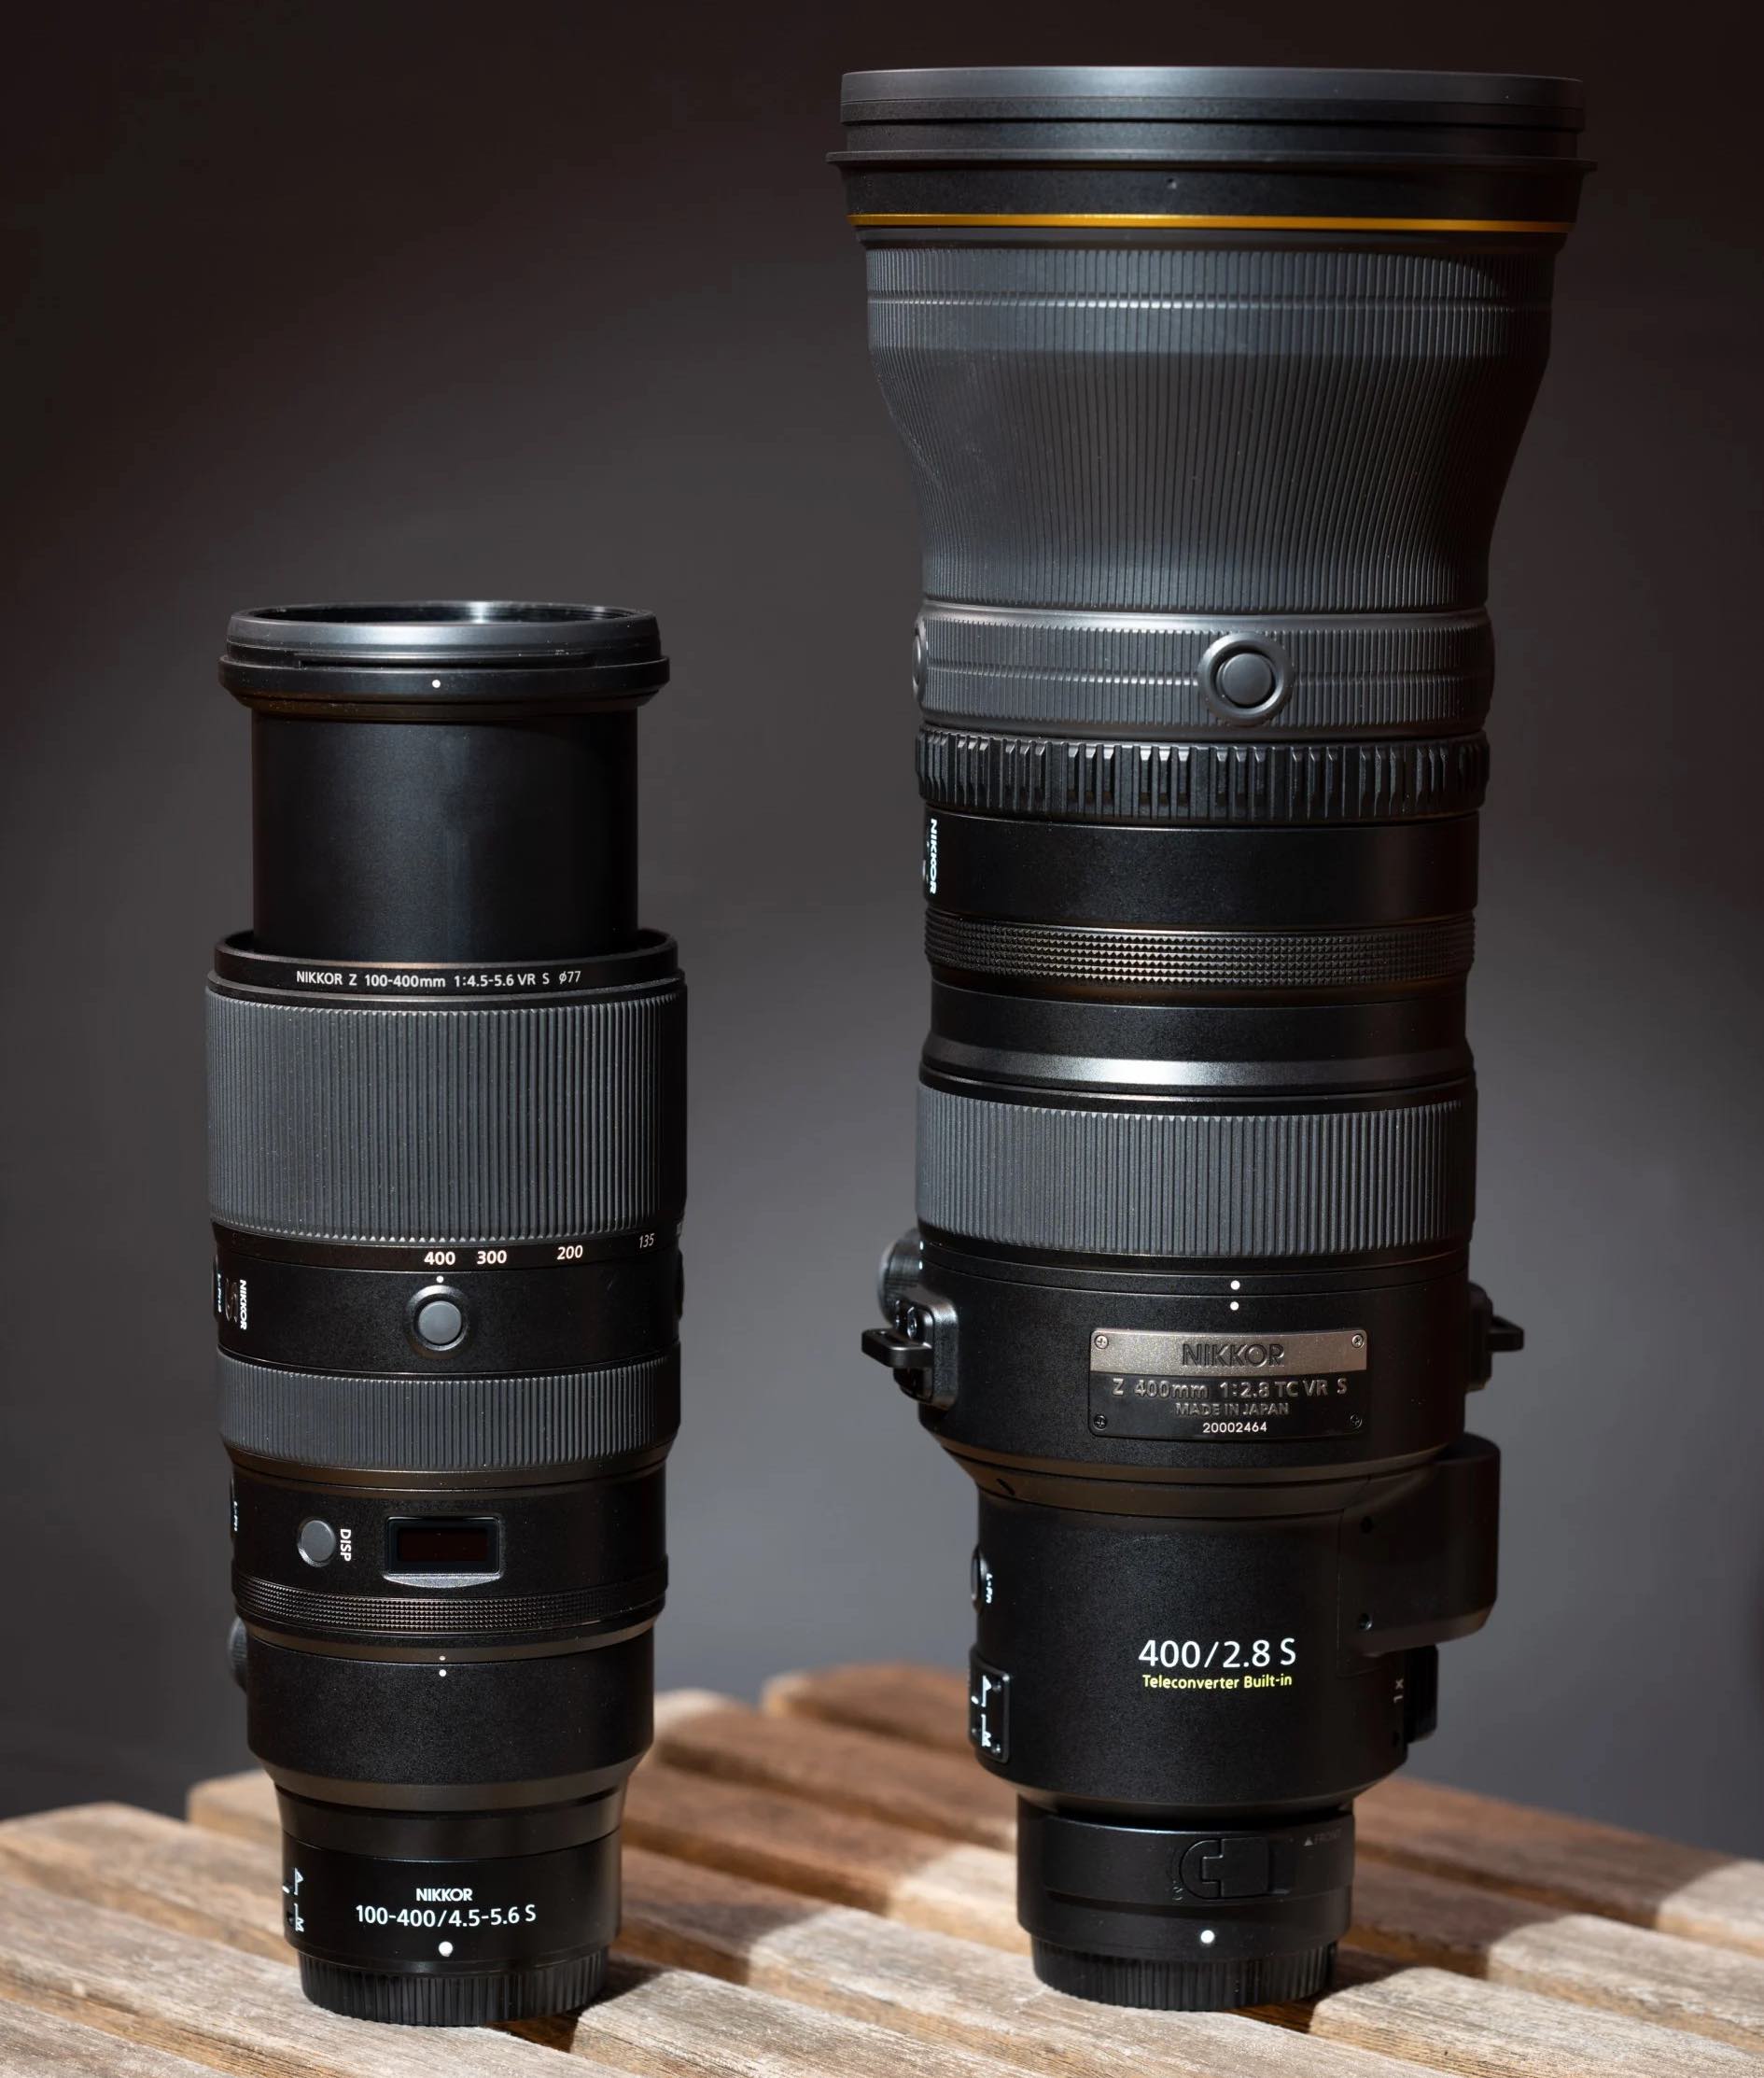 NIKKOR Z 400mm f/2.8 TC VR S  Mirrorless Interchangeable Lens